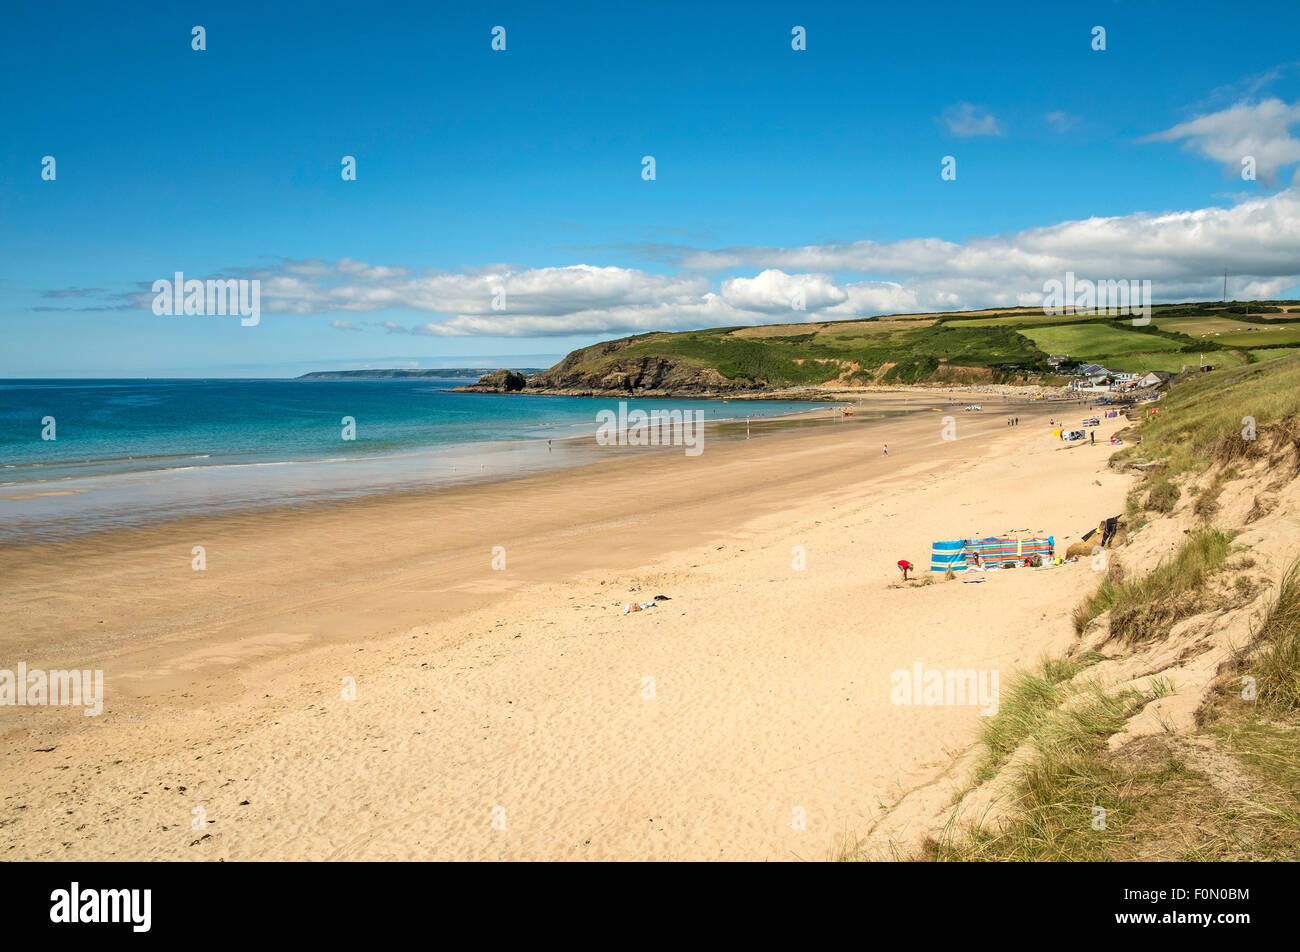 Praa sands beach near Helston in Cornwall, UK Stock Photo